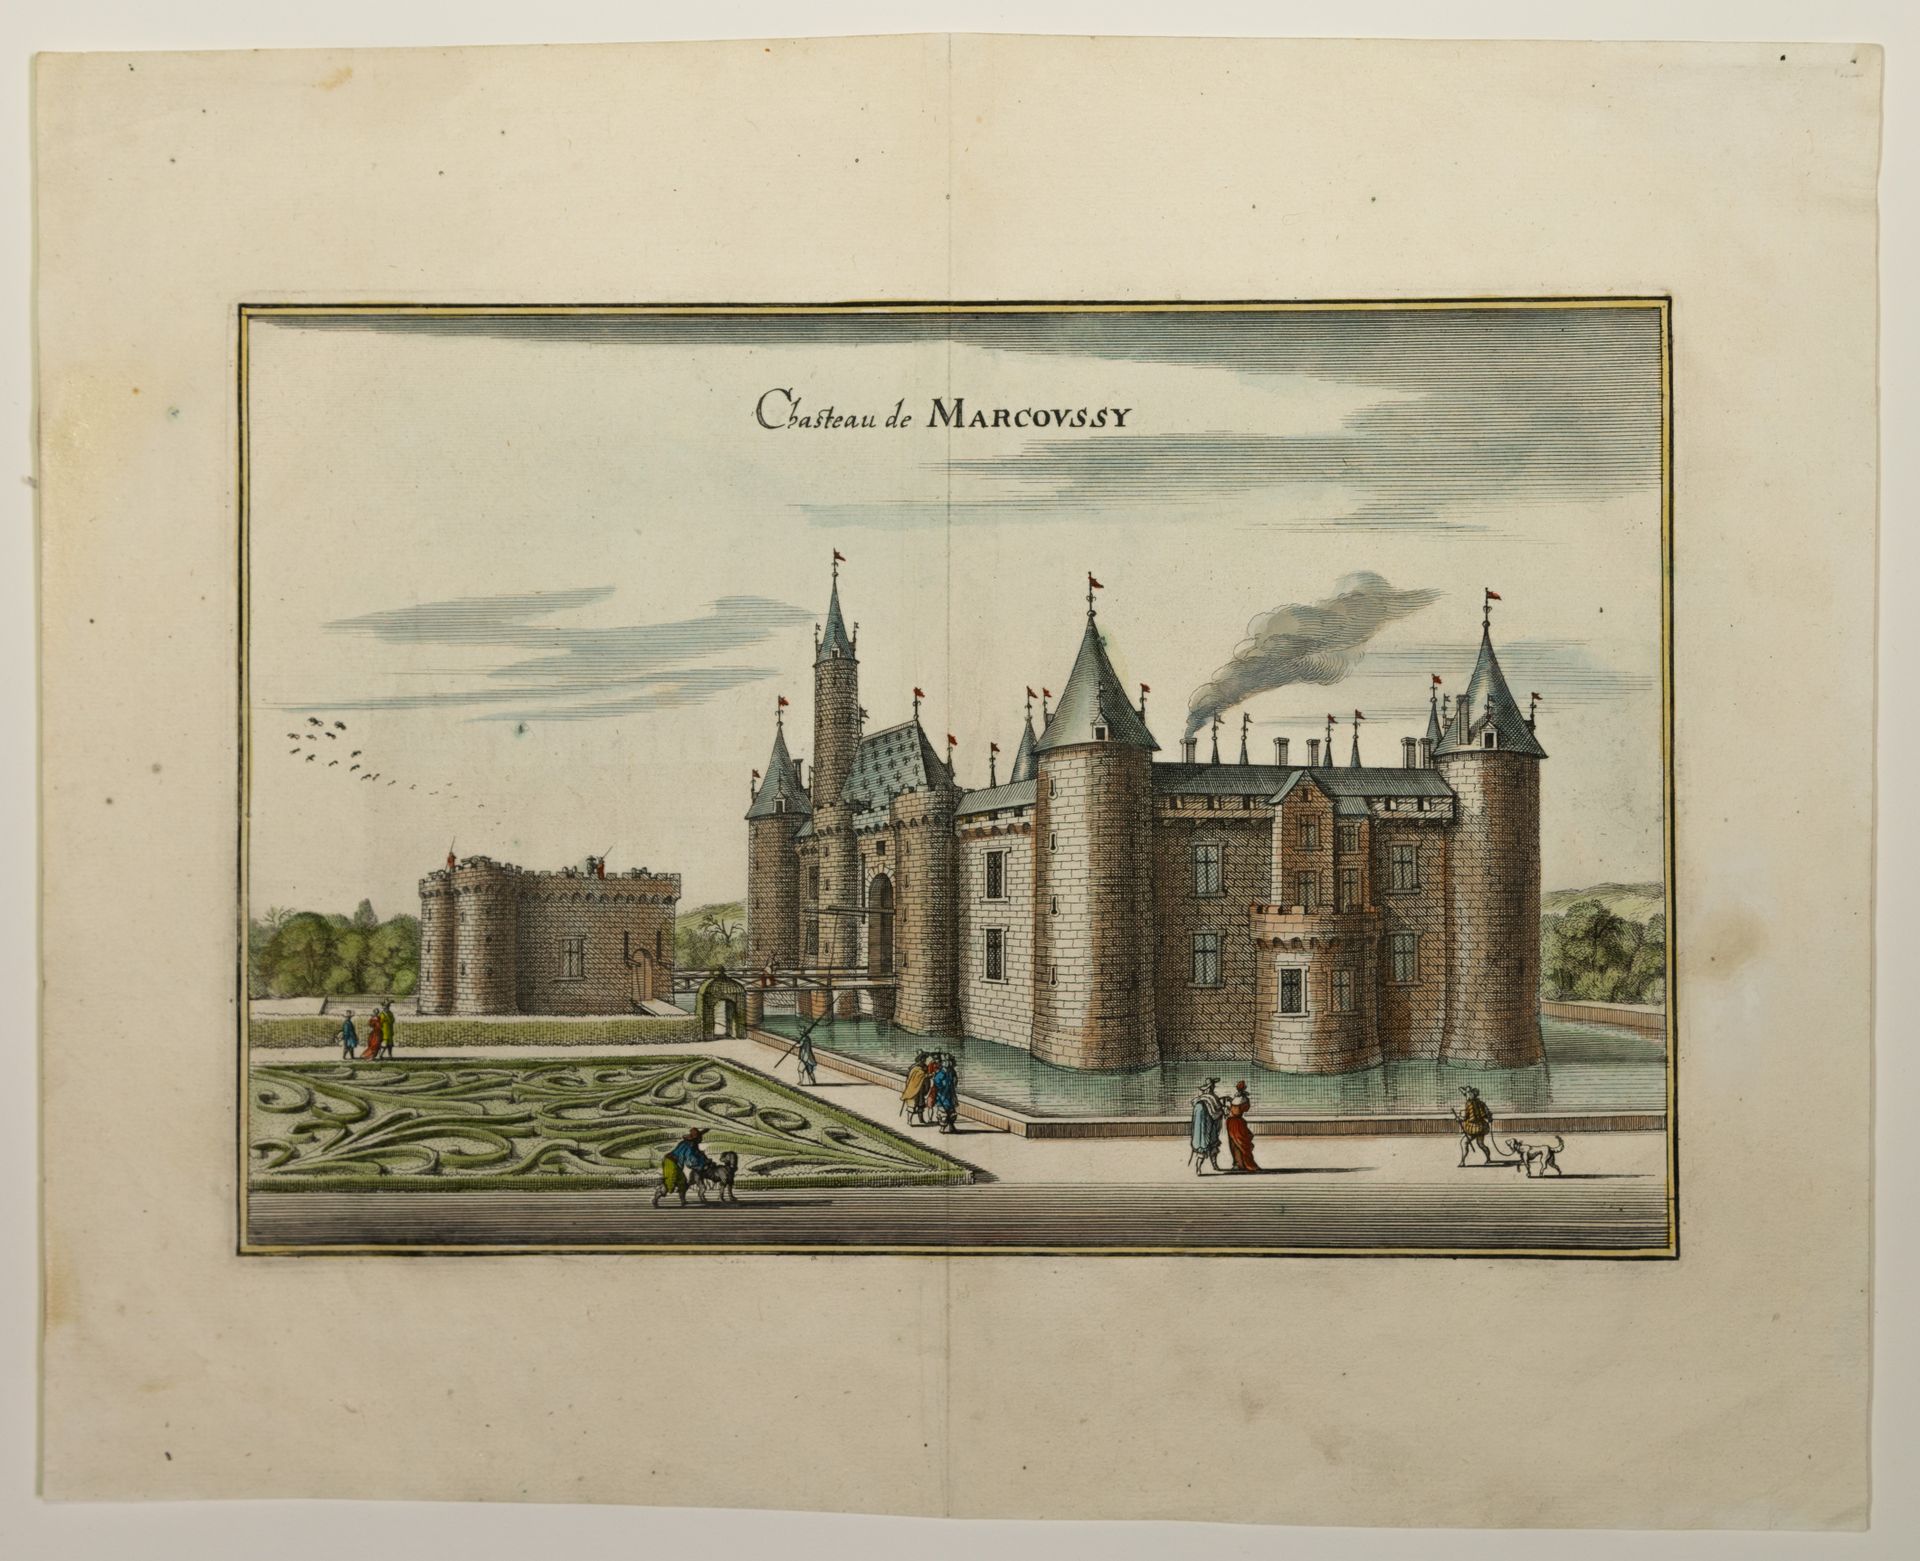 Null ESSONNE. Castillo de MARCOUSSIS. Grabado del siglo XVII de MÉRIAN. "Chastea&hellip;